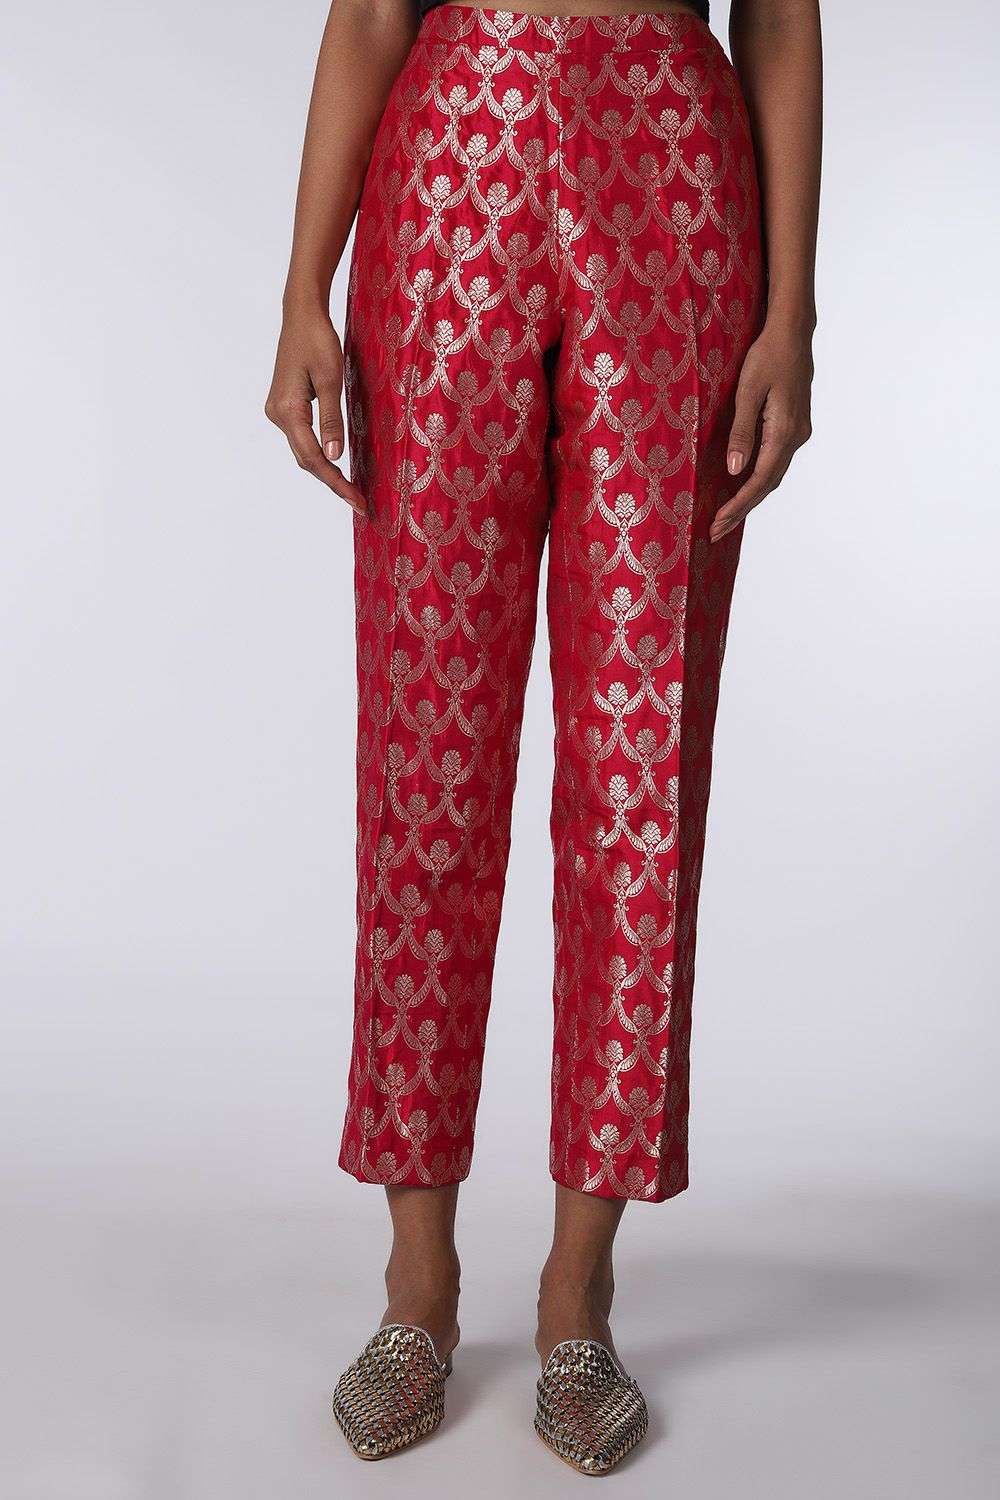 Designer Kurti Pants Collection For Women - Daraz India